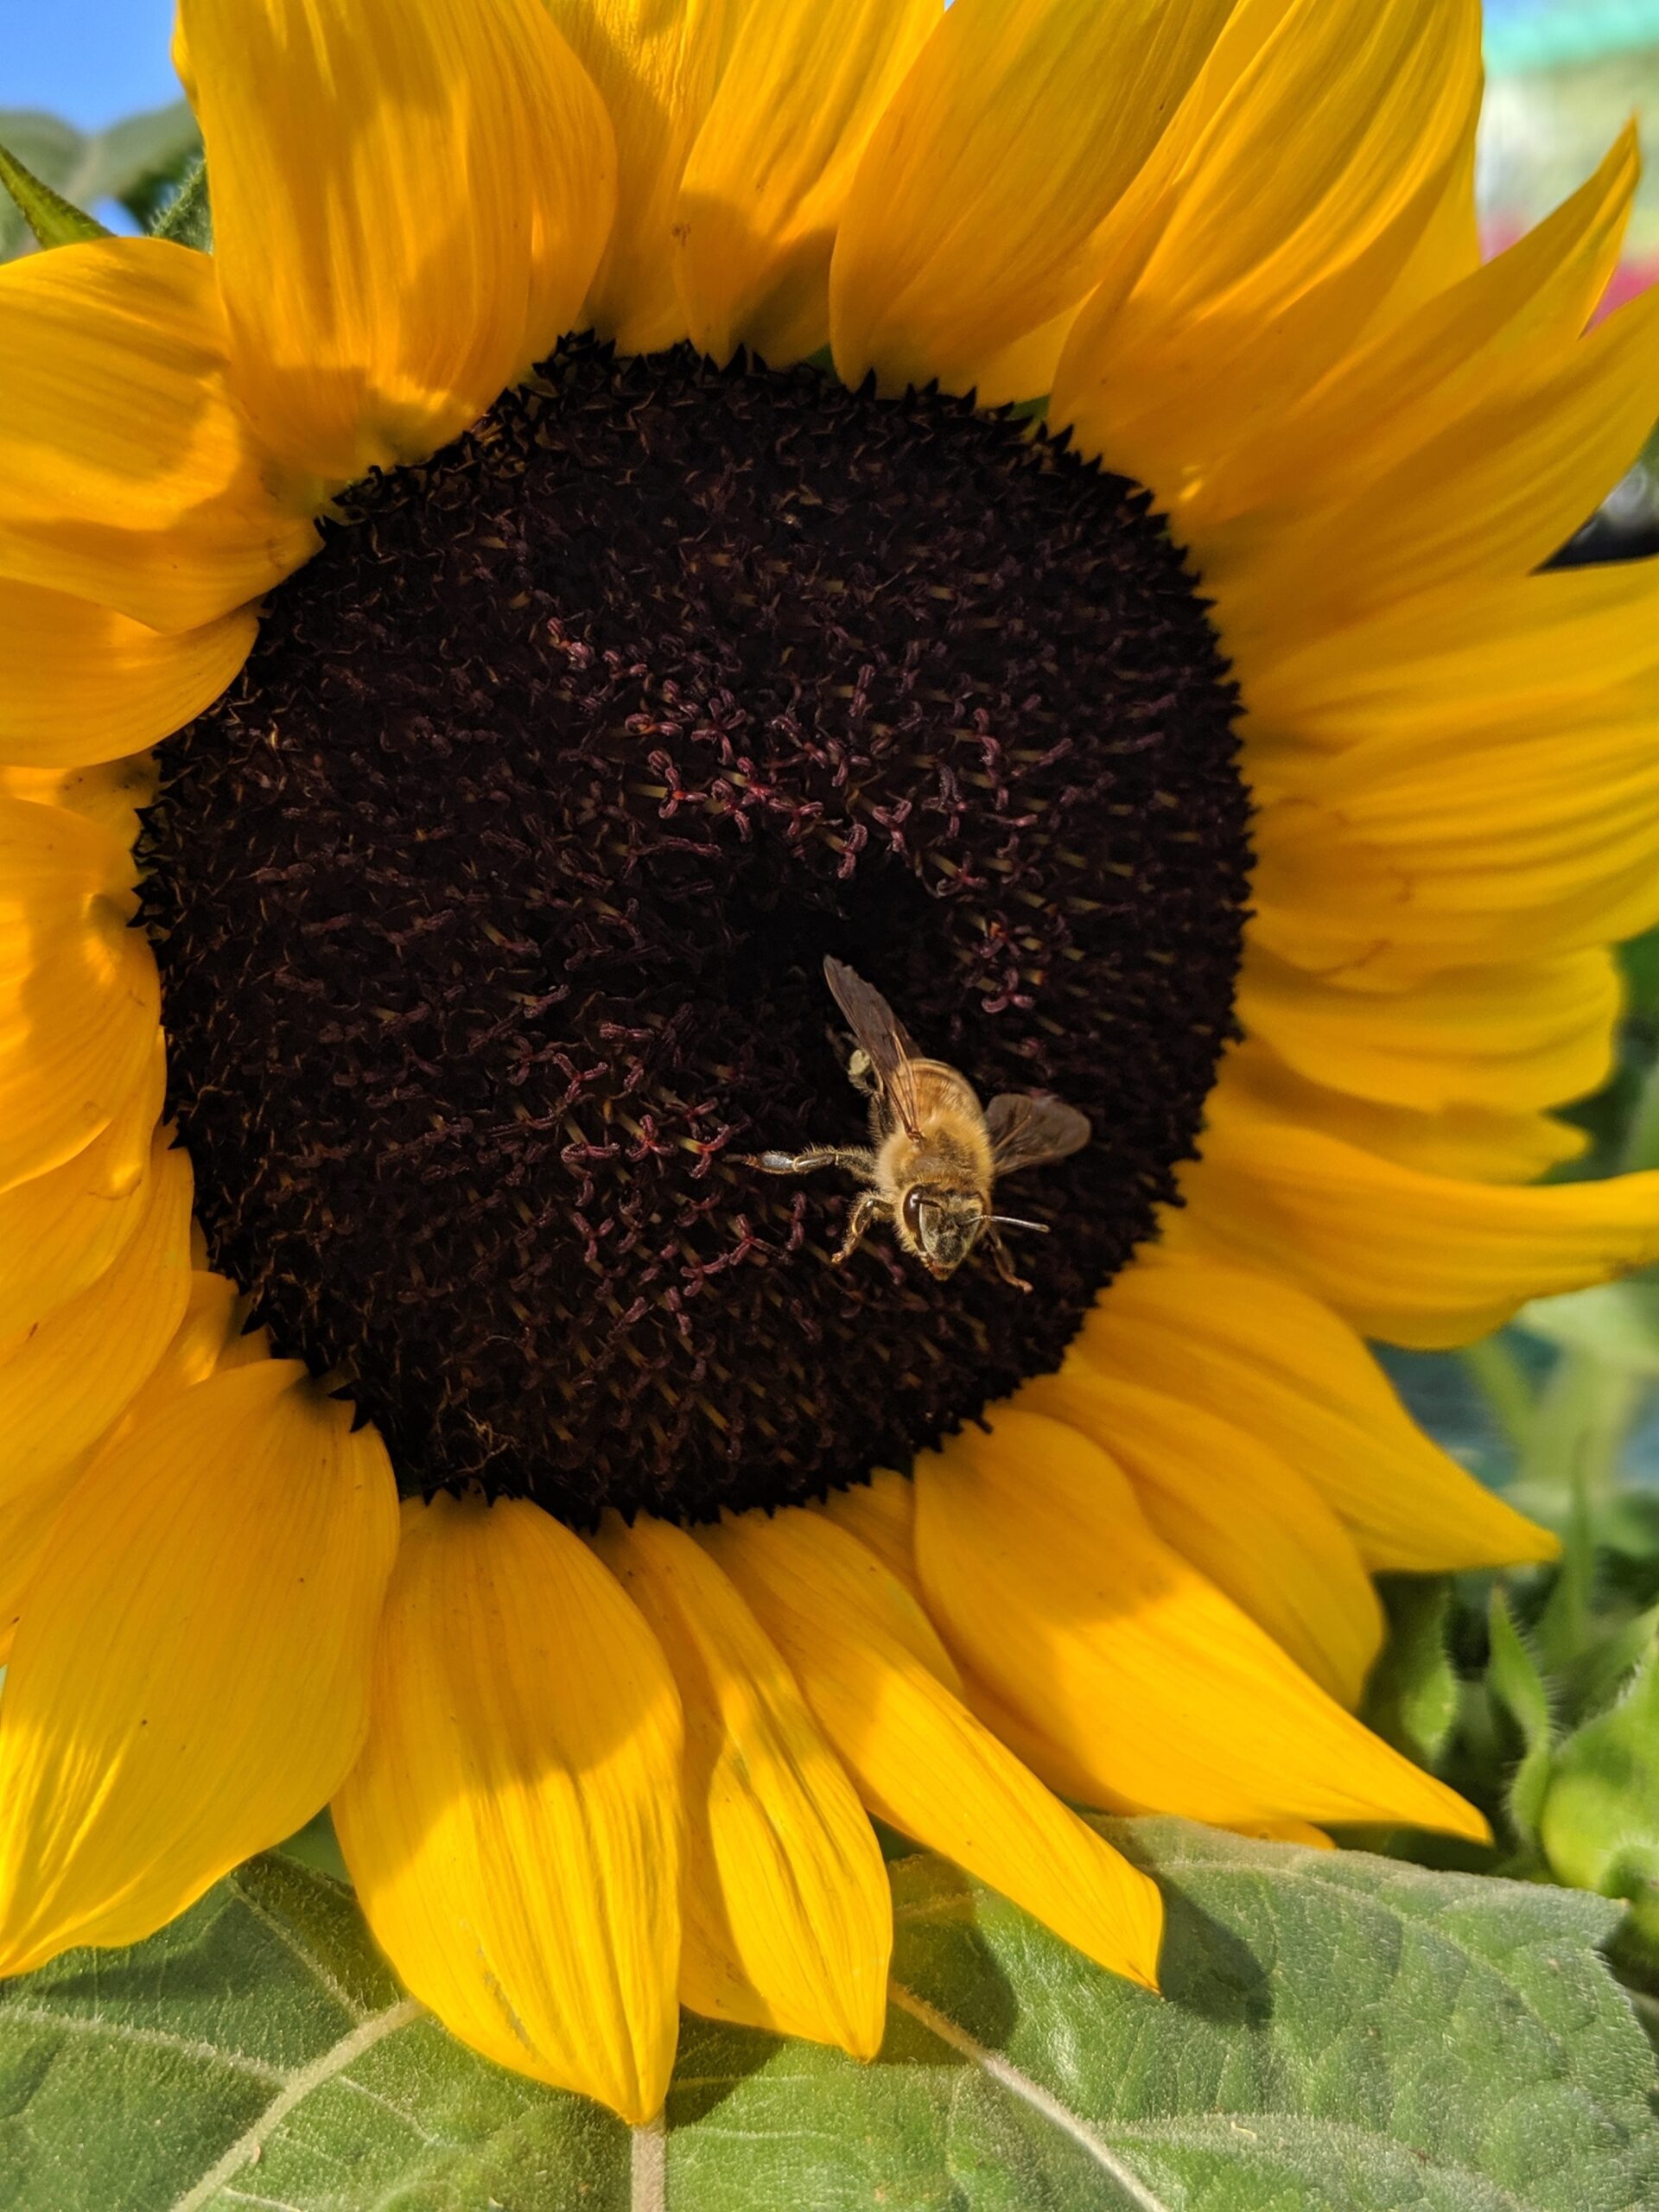 Bee in sunflower